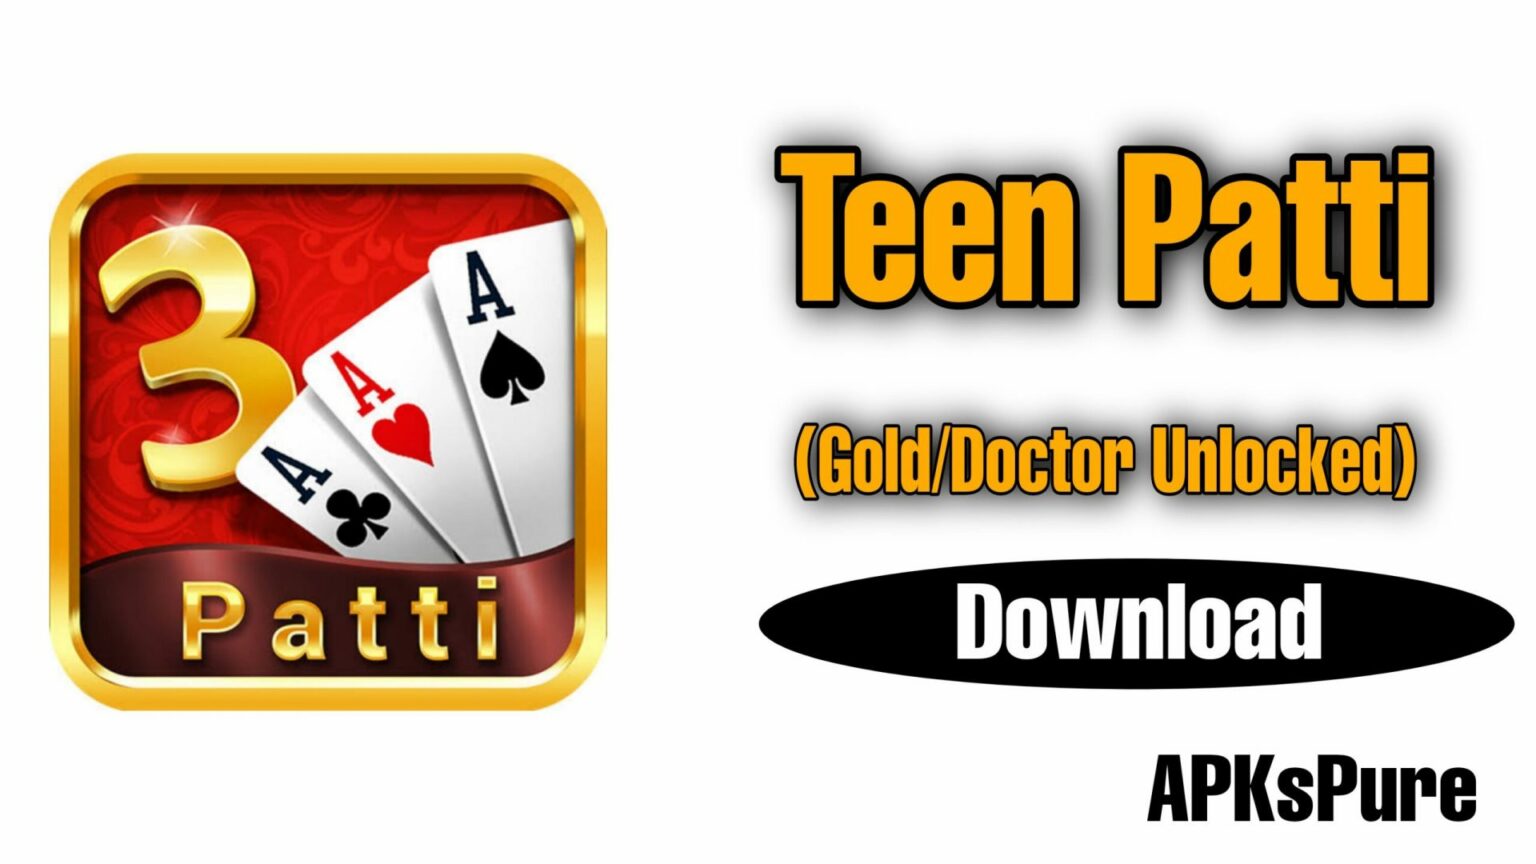 teen patti gold apk free download